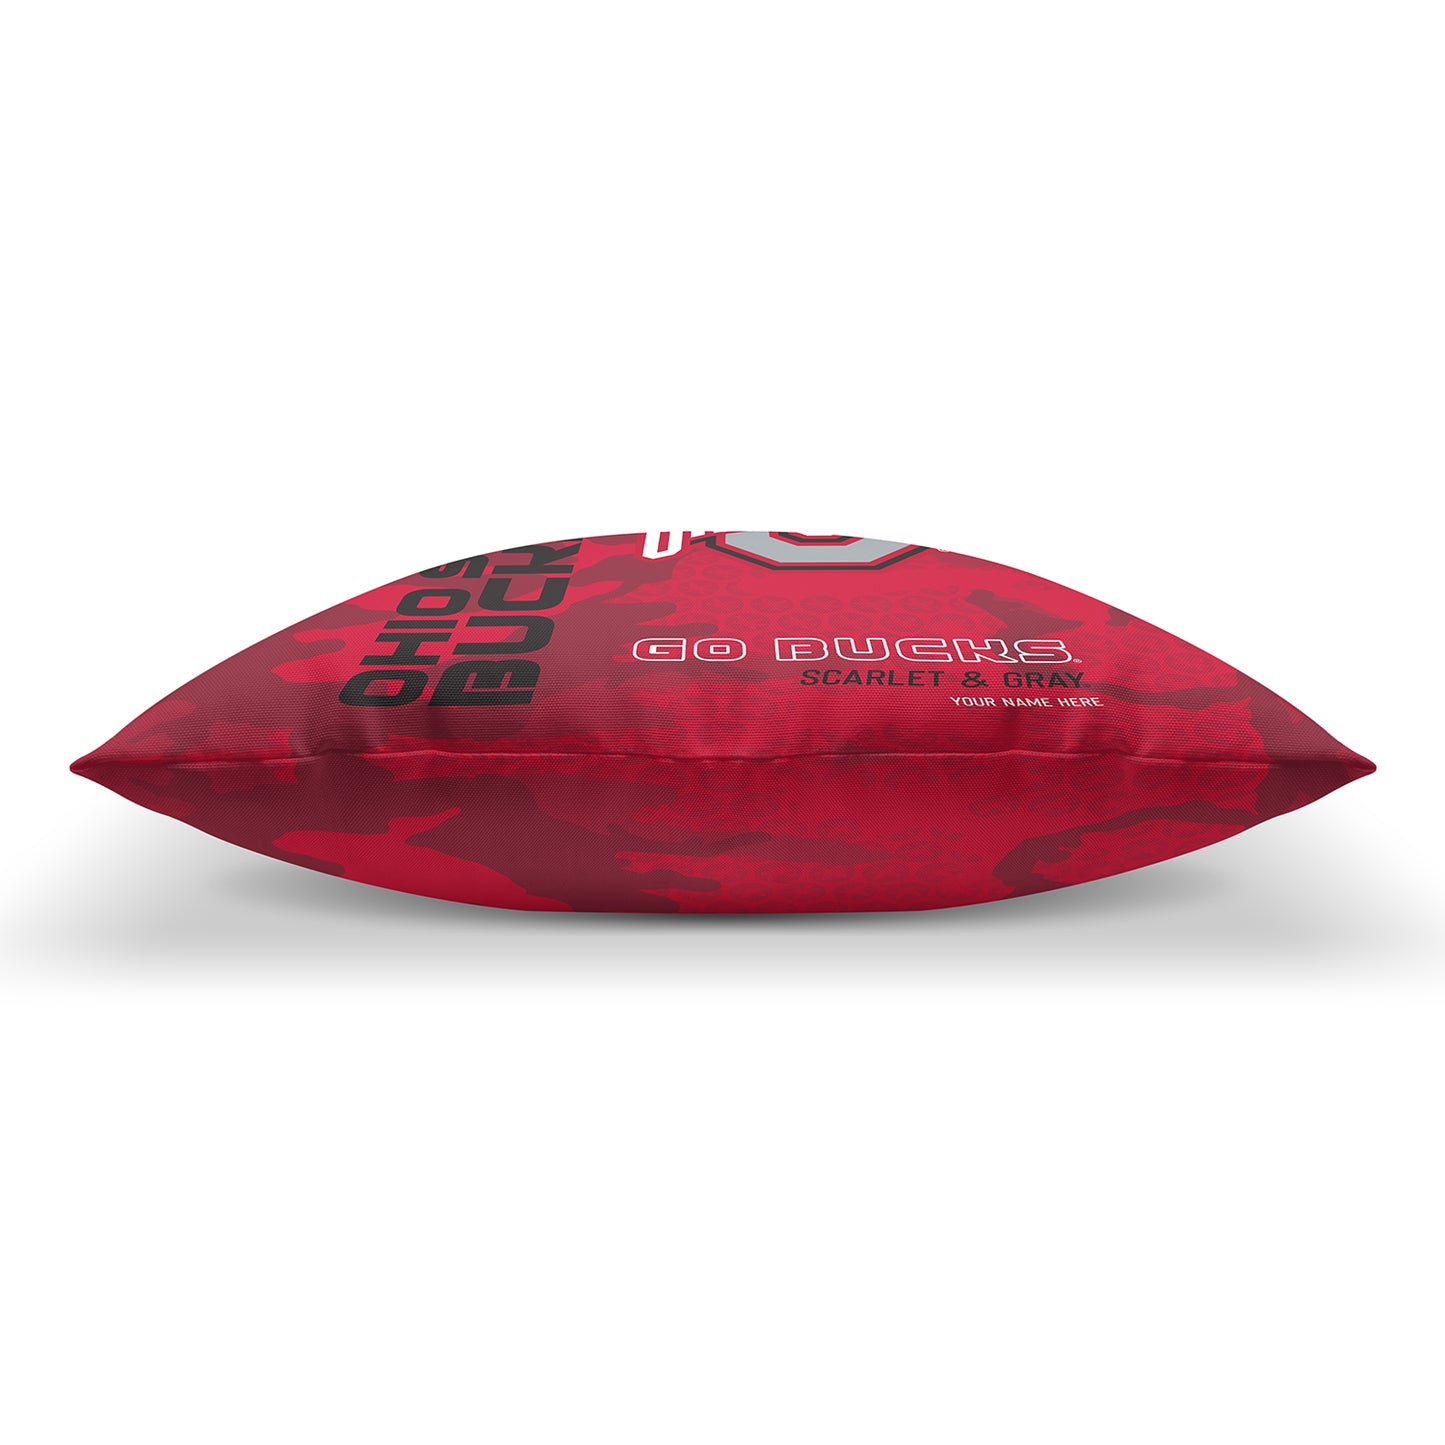 Ohio State Buckeyes Red Camo Throw Pillow | Personalized | Custom